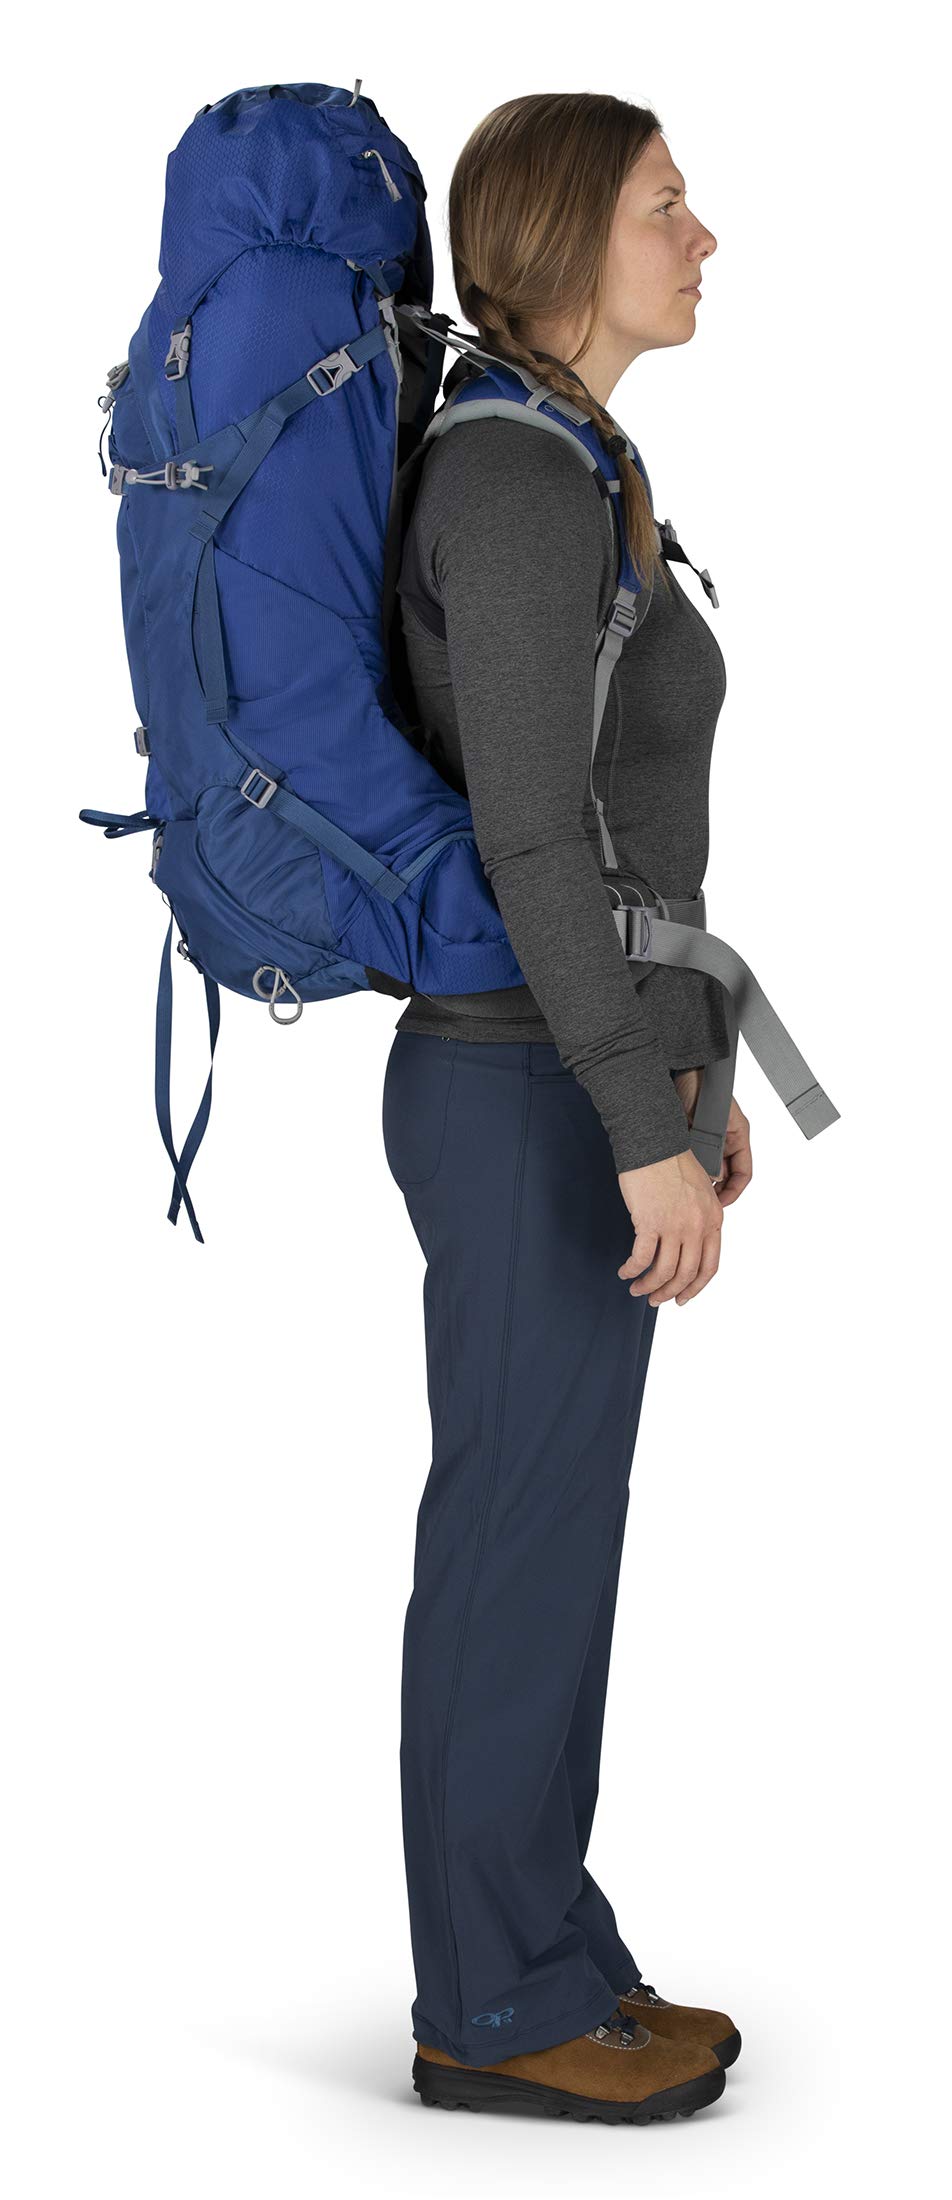 Osprey Women's Ariel 65 Backpack, Ceramic Blue, Medium/Large